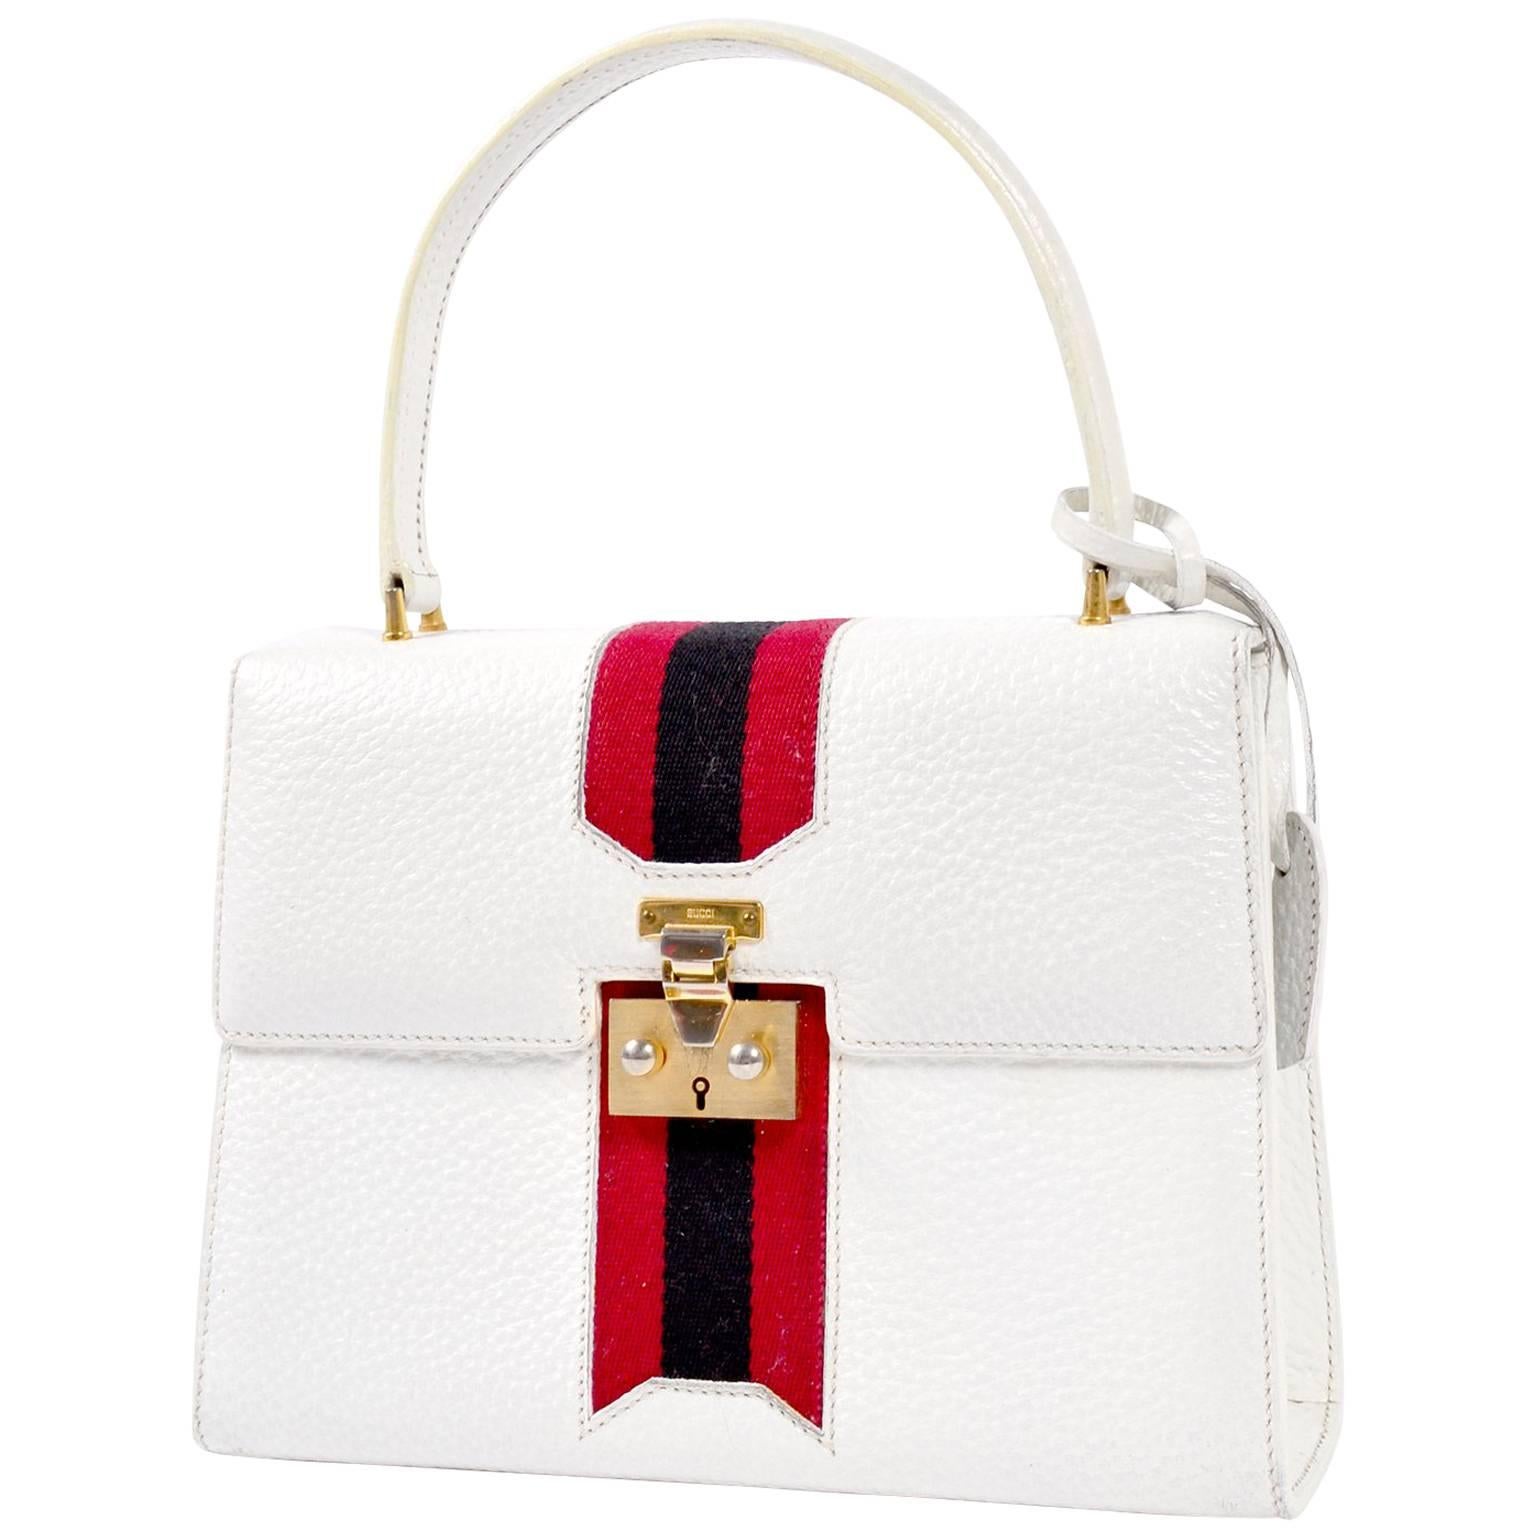 Vintage White Gucci Handbag Satchel in Leather With Stripes & Key Lock